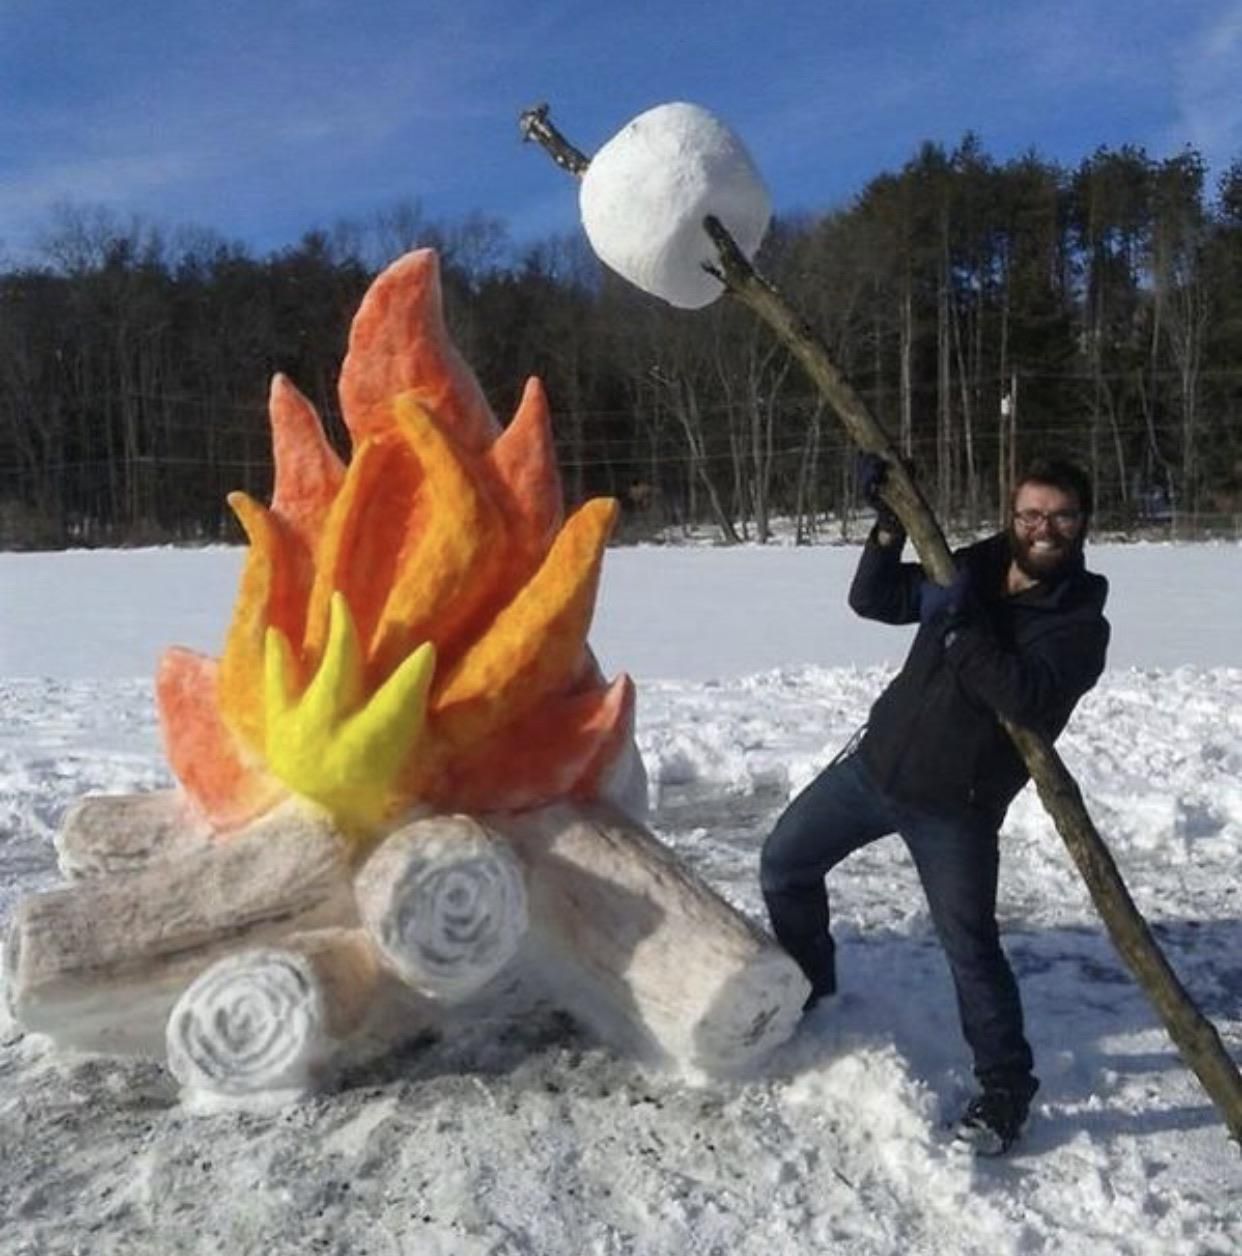 Roasting a giant marshmallow